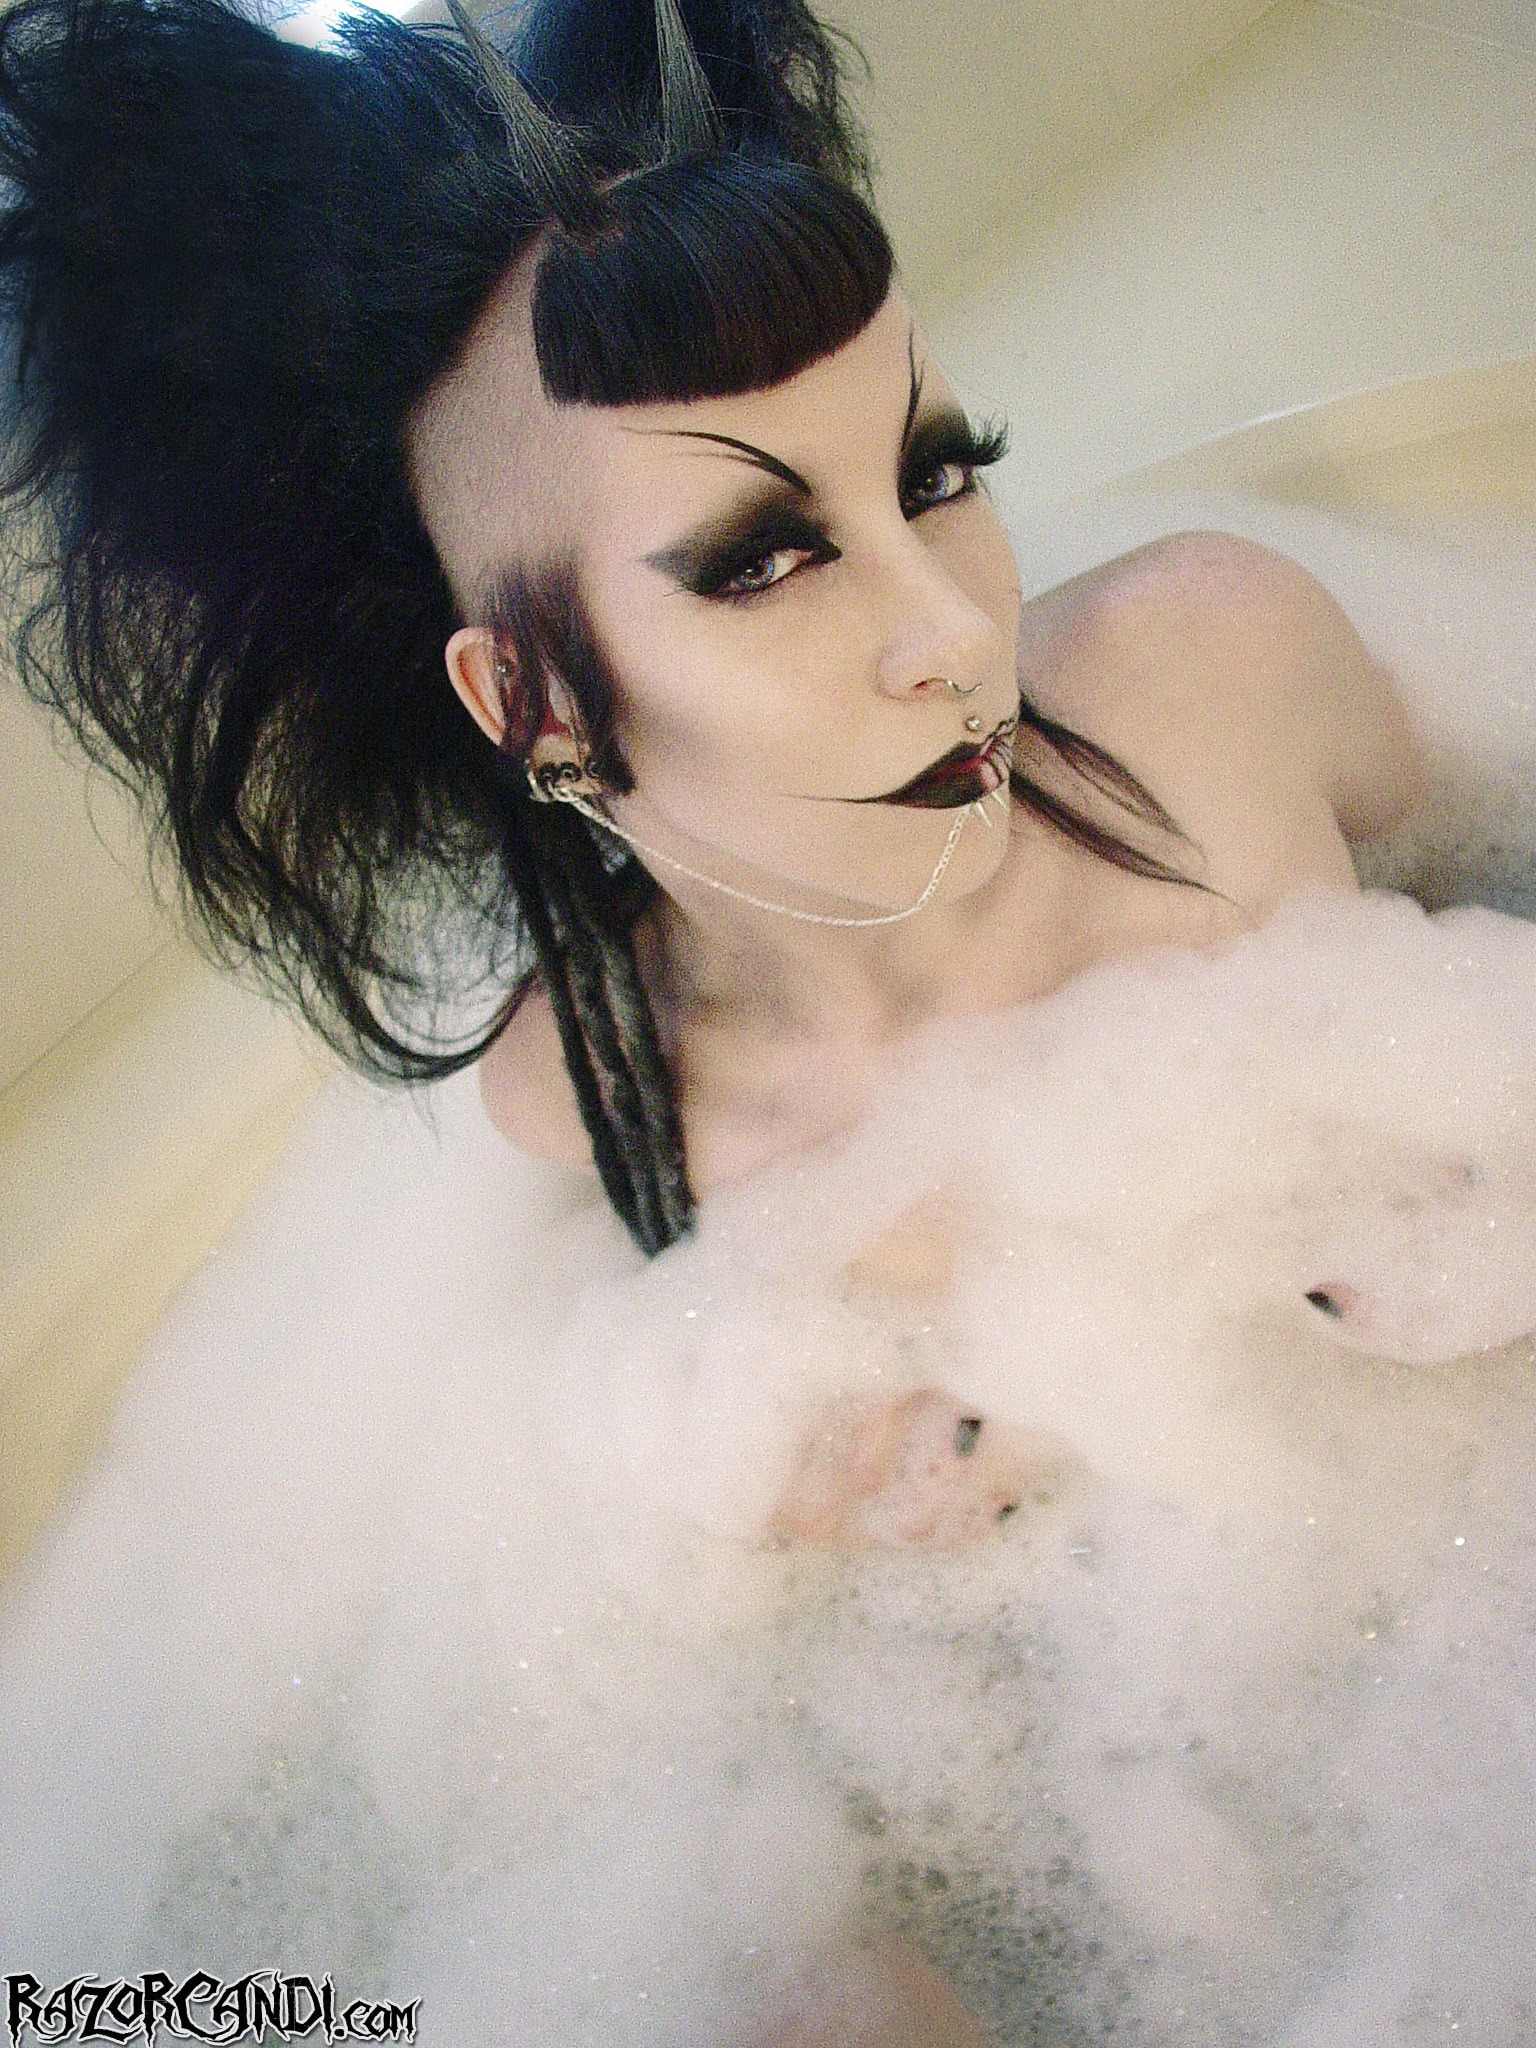 Razor Candi 'Classic Gothic Deathrock Beauty in Bubble Bath' starring Razor Candi (Photo 7)